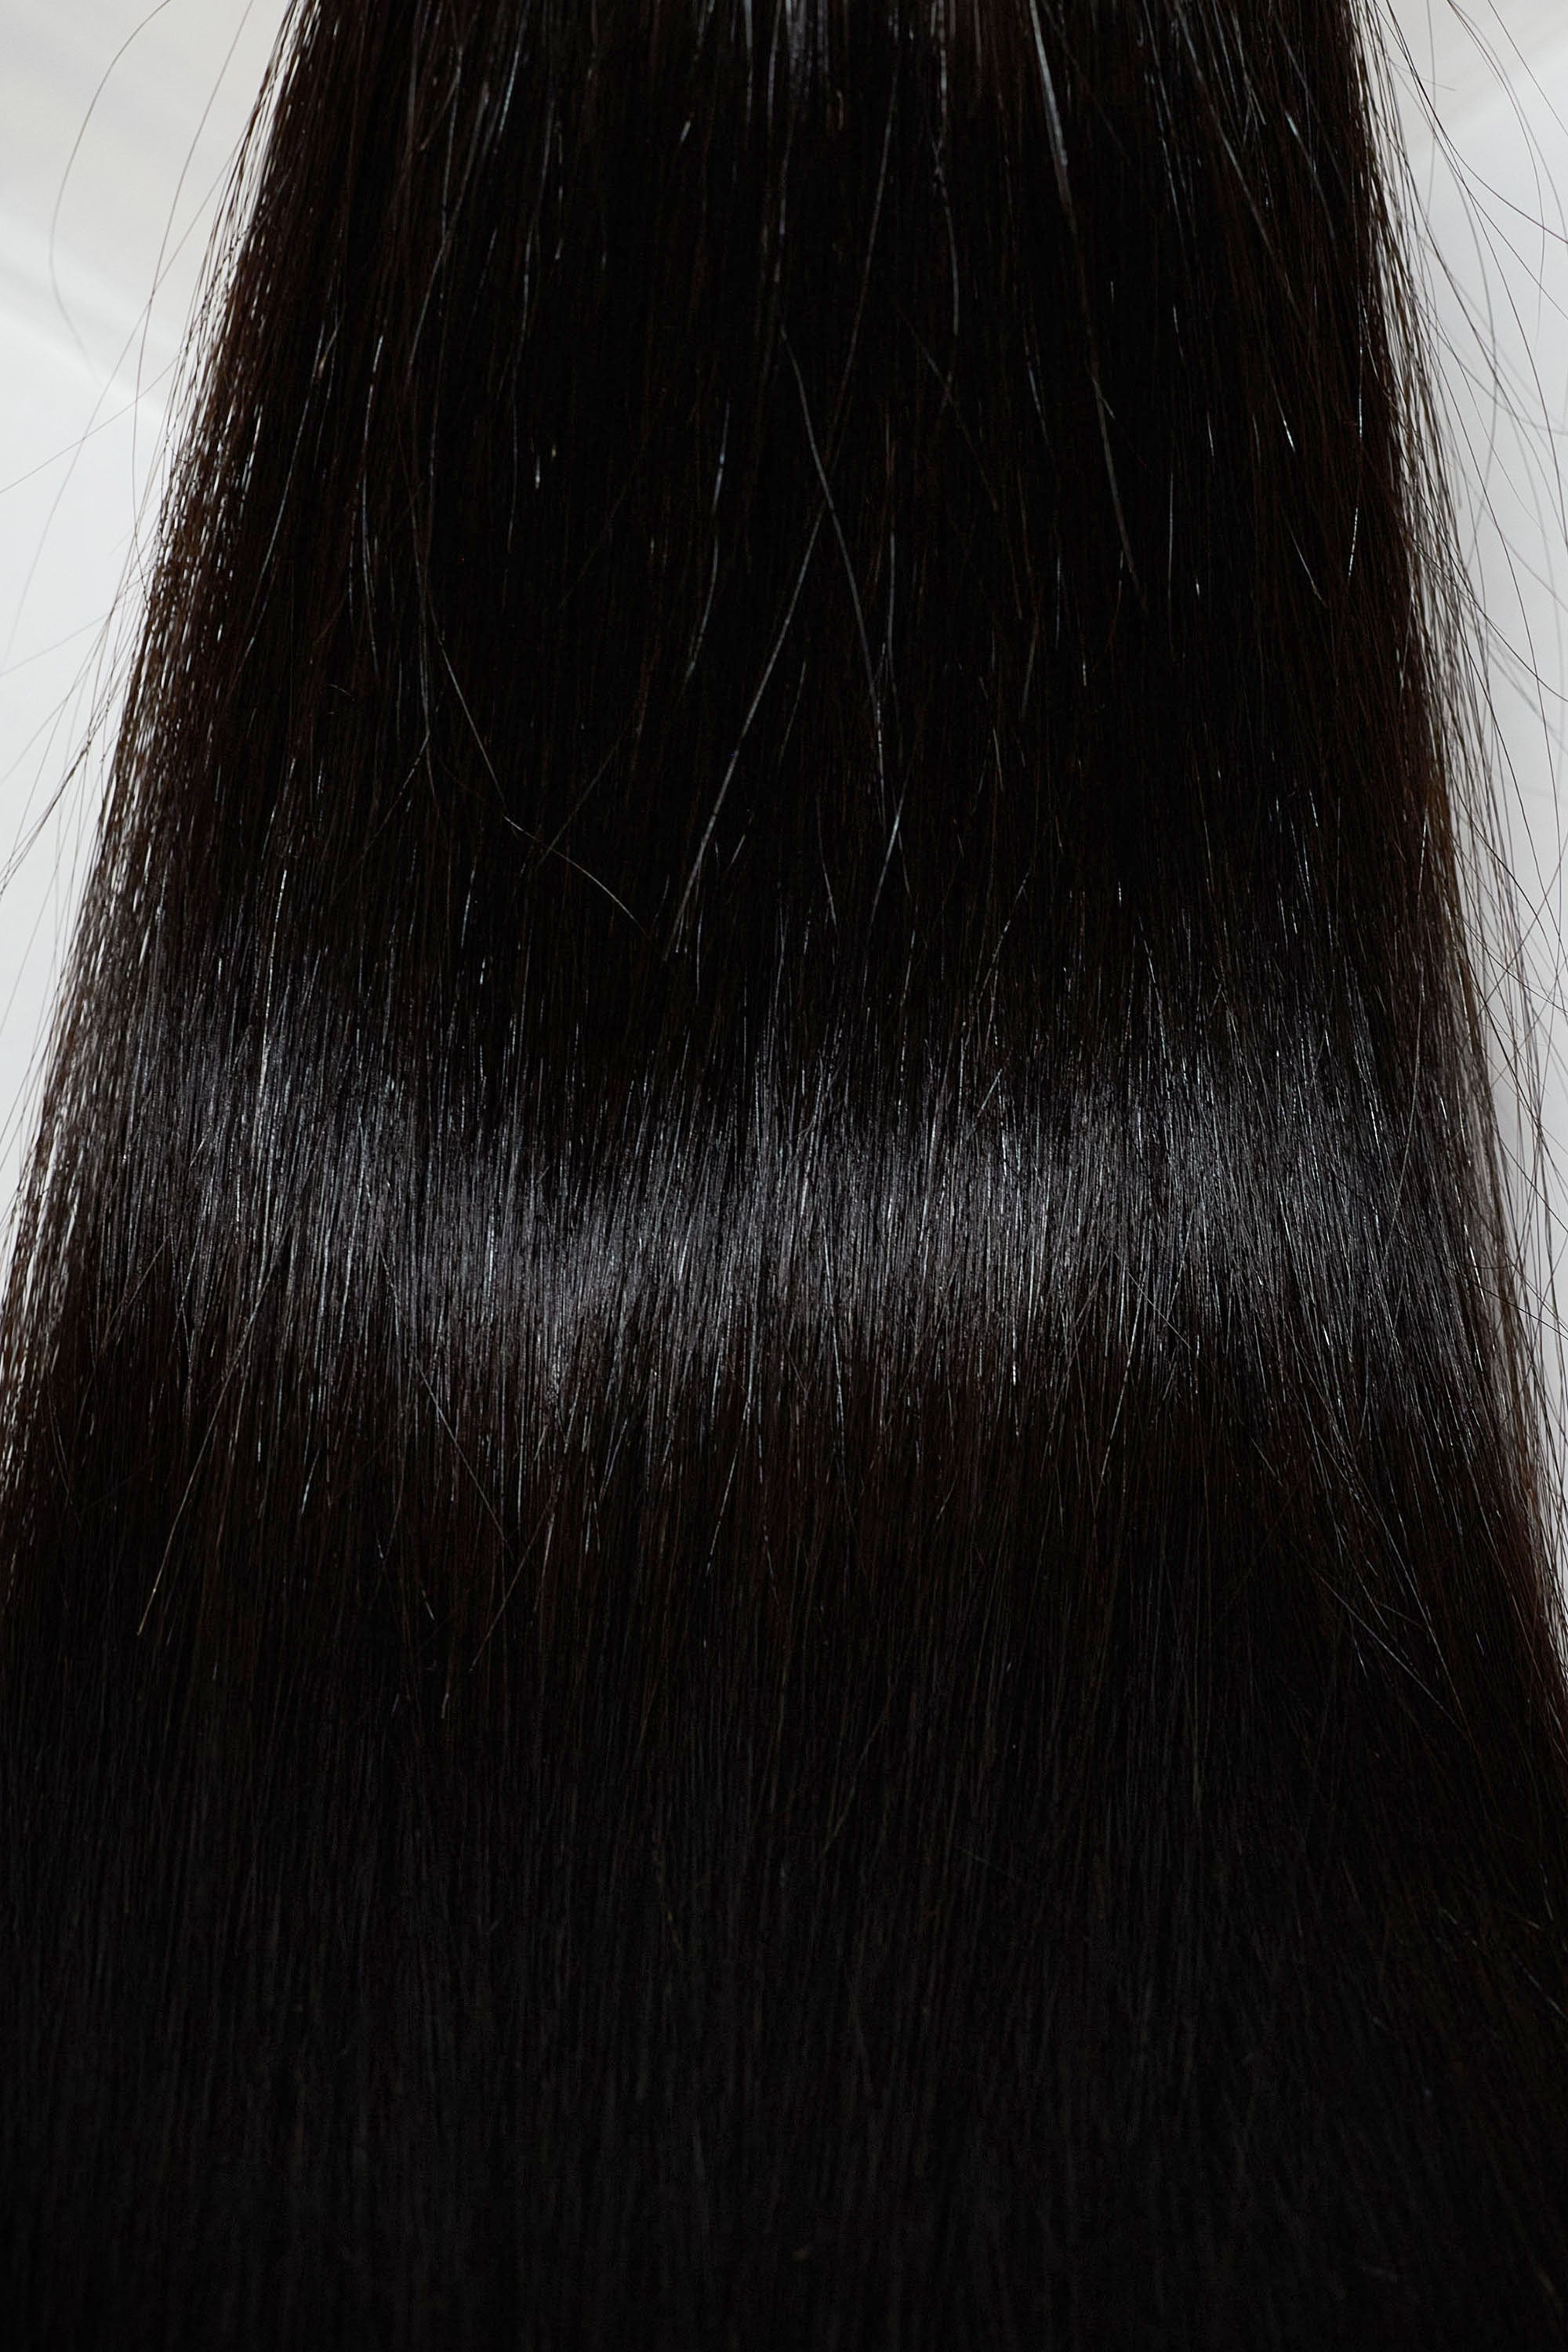 Behair professional Keratin Tip "Premium" 22" (55cm) Natural Straight Jet Black #1 - 25g (Micro - 0.5g each pcs) hair extensions